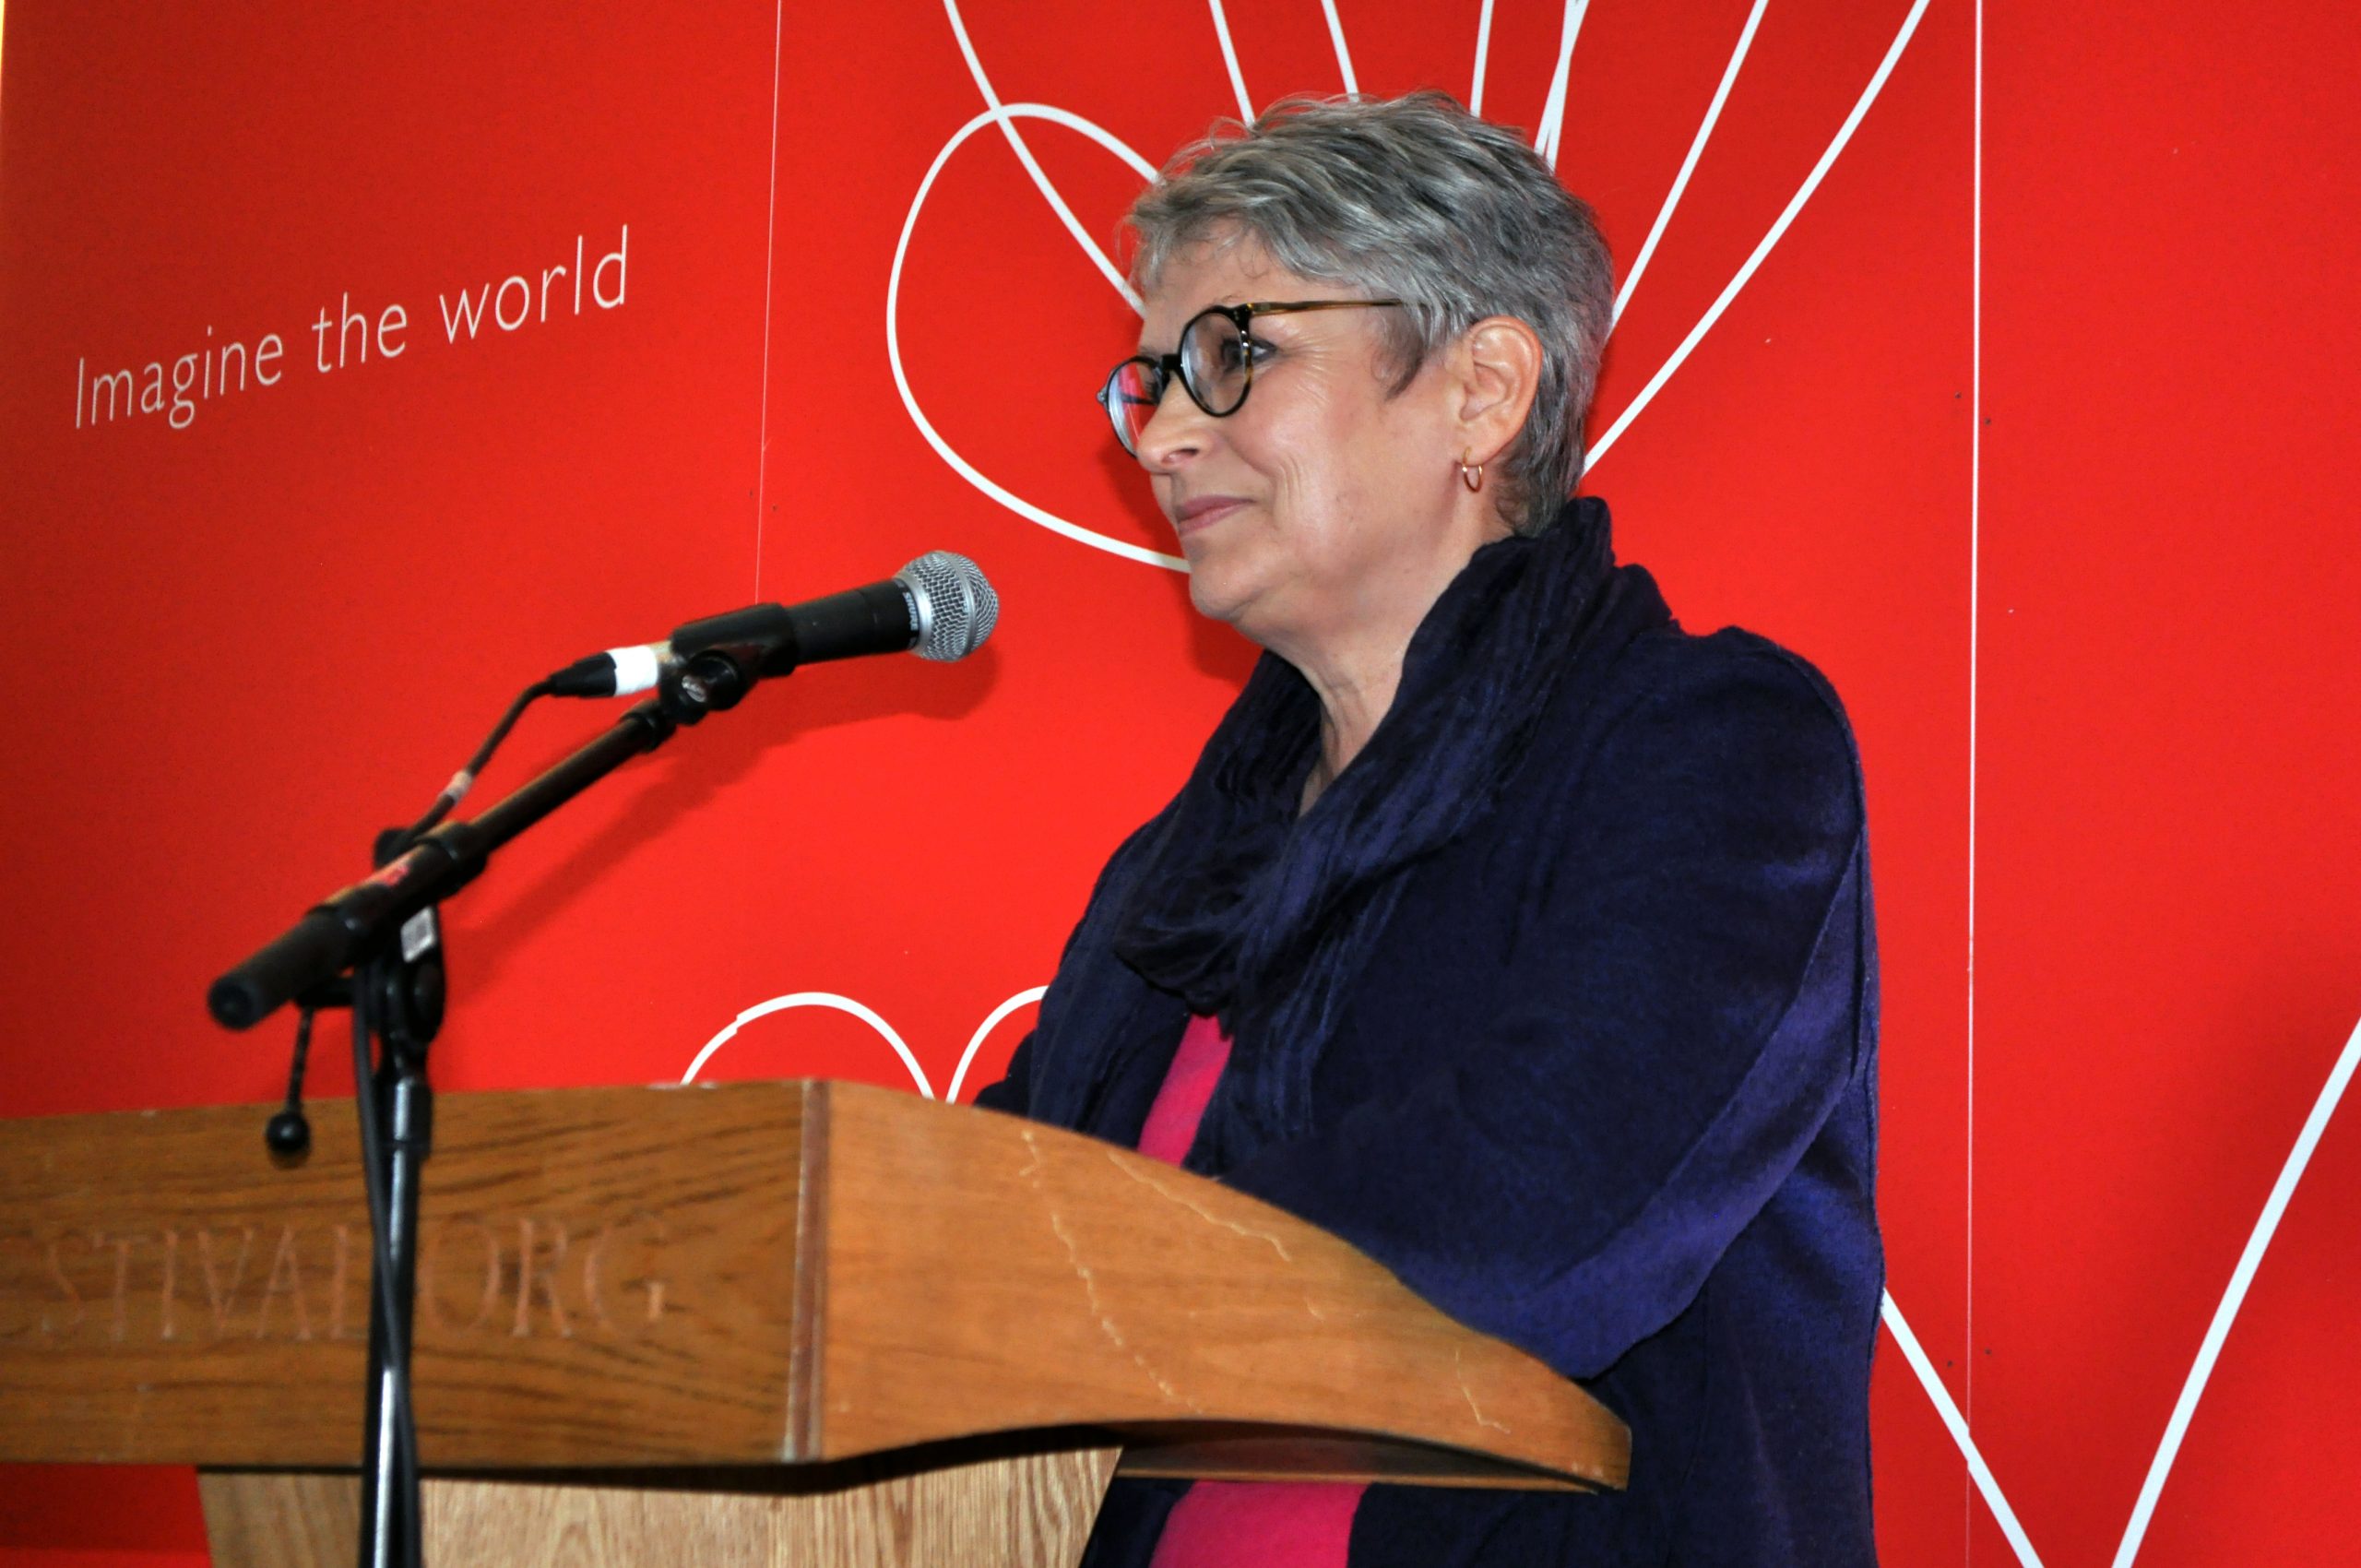 Jean Jenkins presenting at Hay Festival 2019